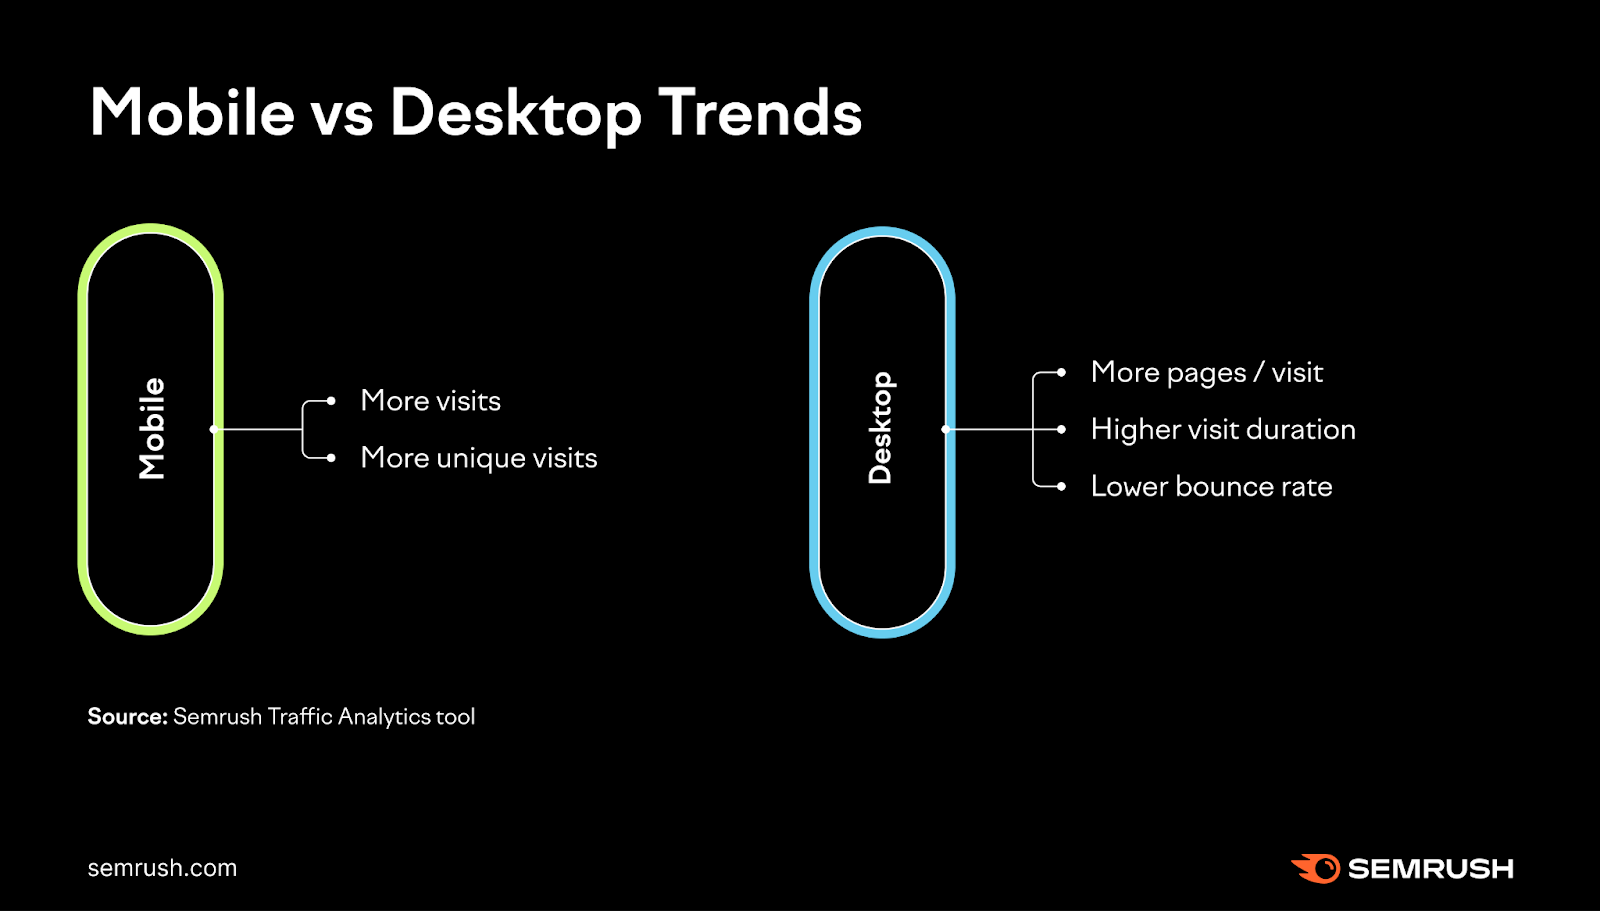 An image summarizing mobile vs desktop trends, based on data from Traffic Analytics tool